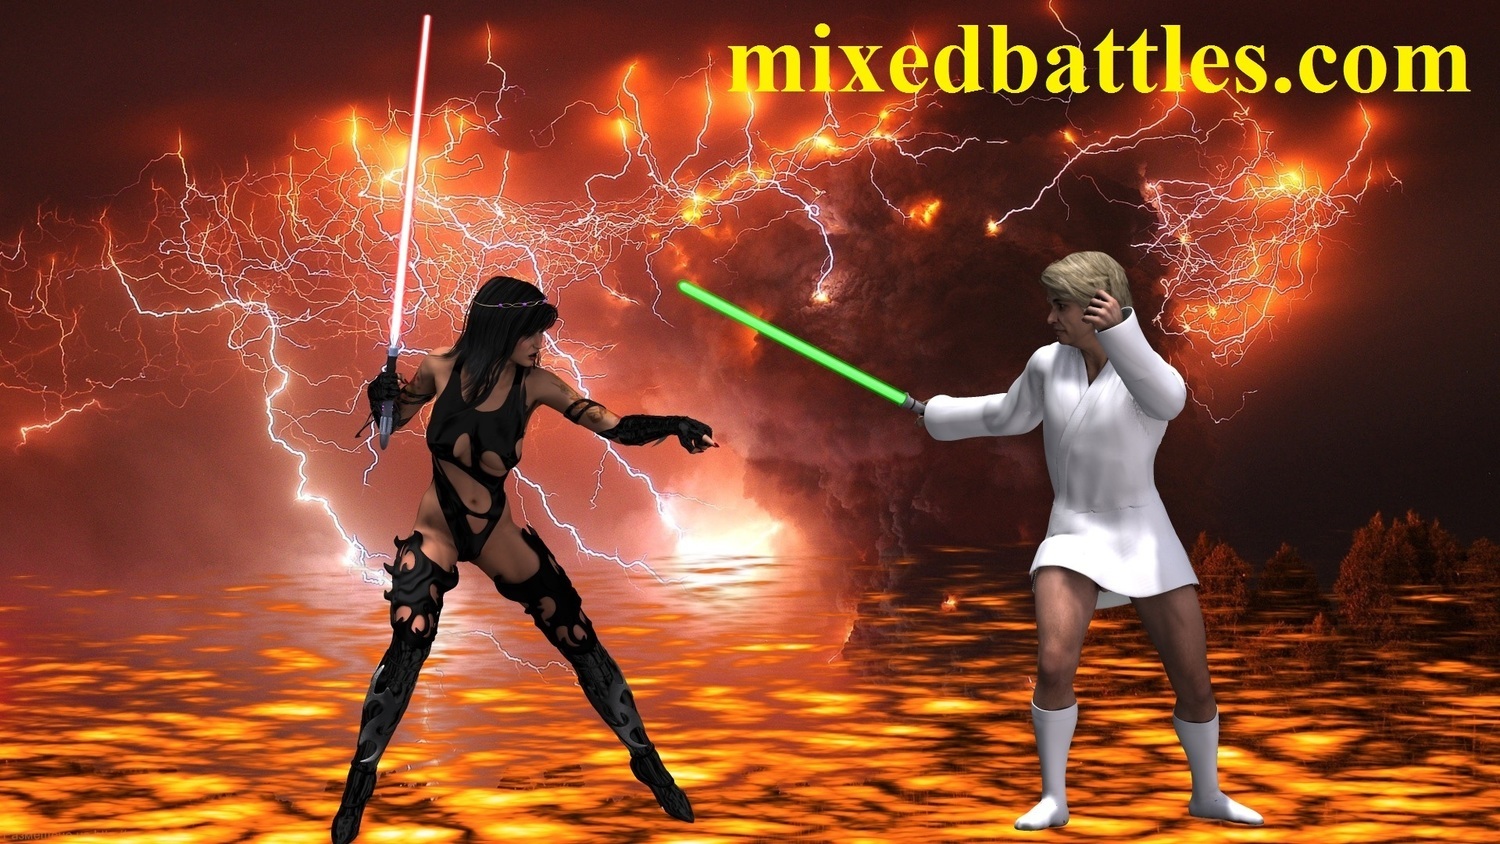 female sith vs male jedi laser sword fighting